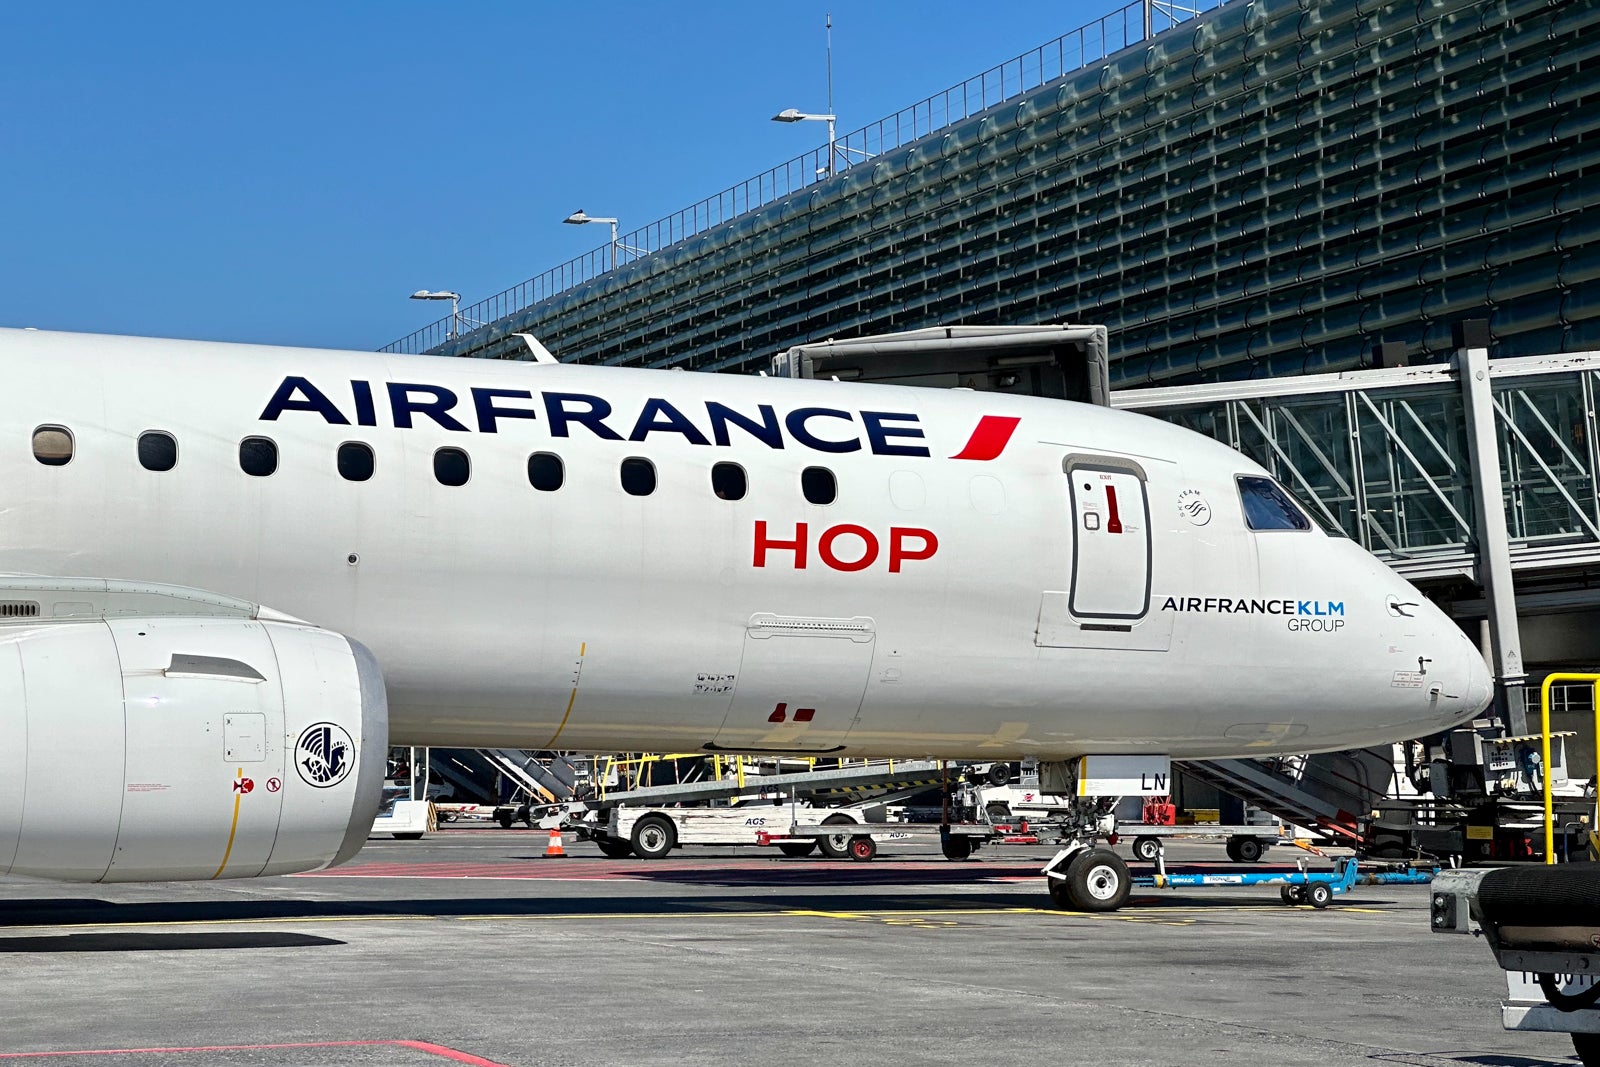 The Complete Guide to Air France La Première